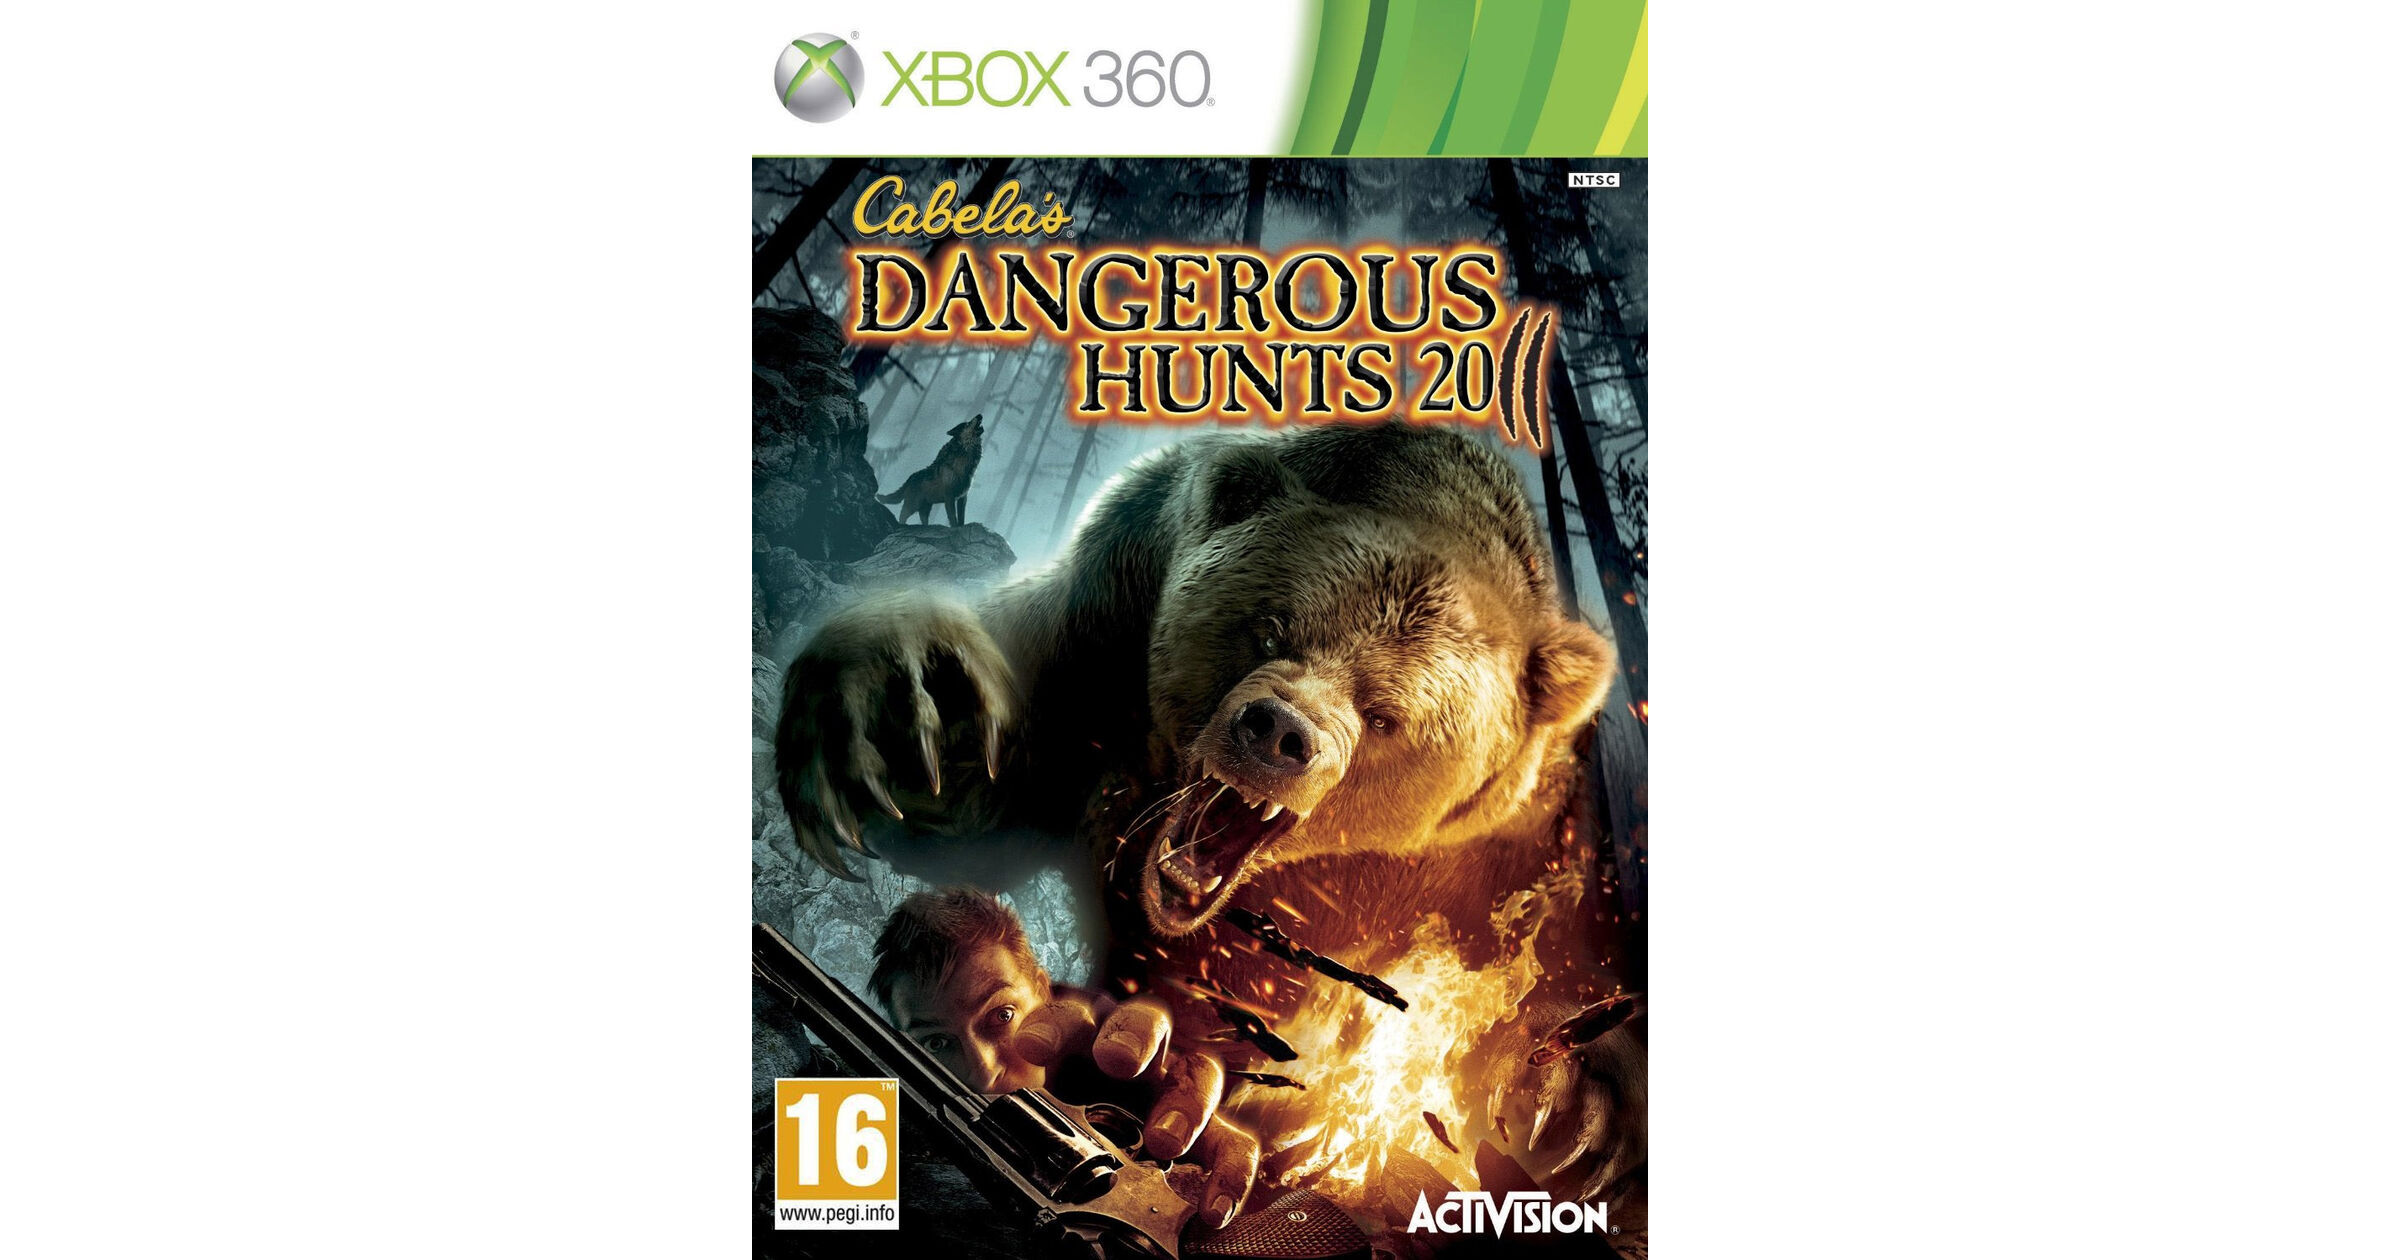 Cabelas Dangerous Hunts 2011 (No Gun) – Xbox